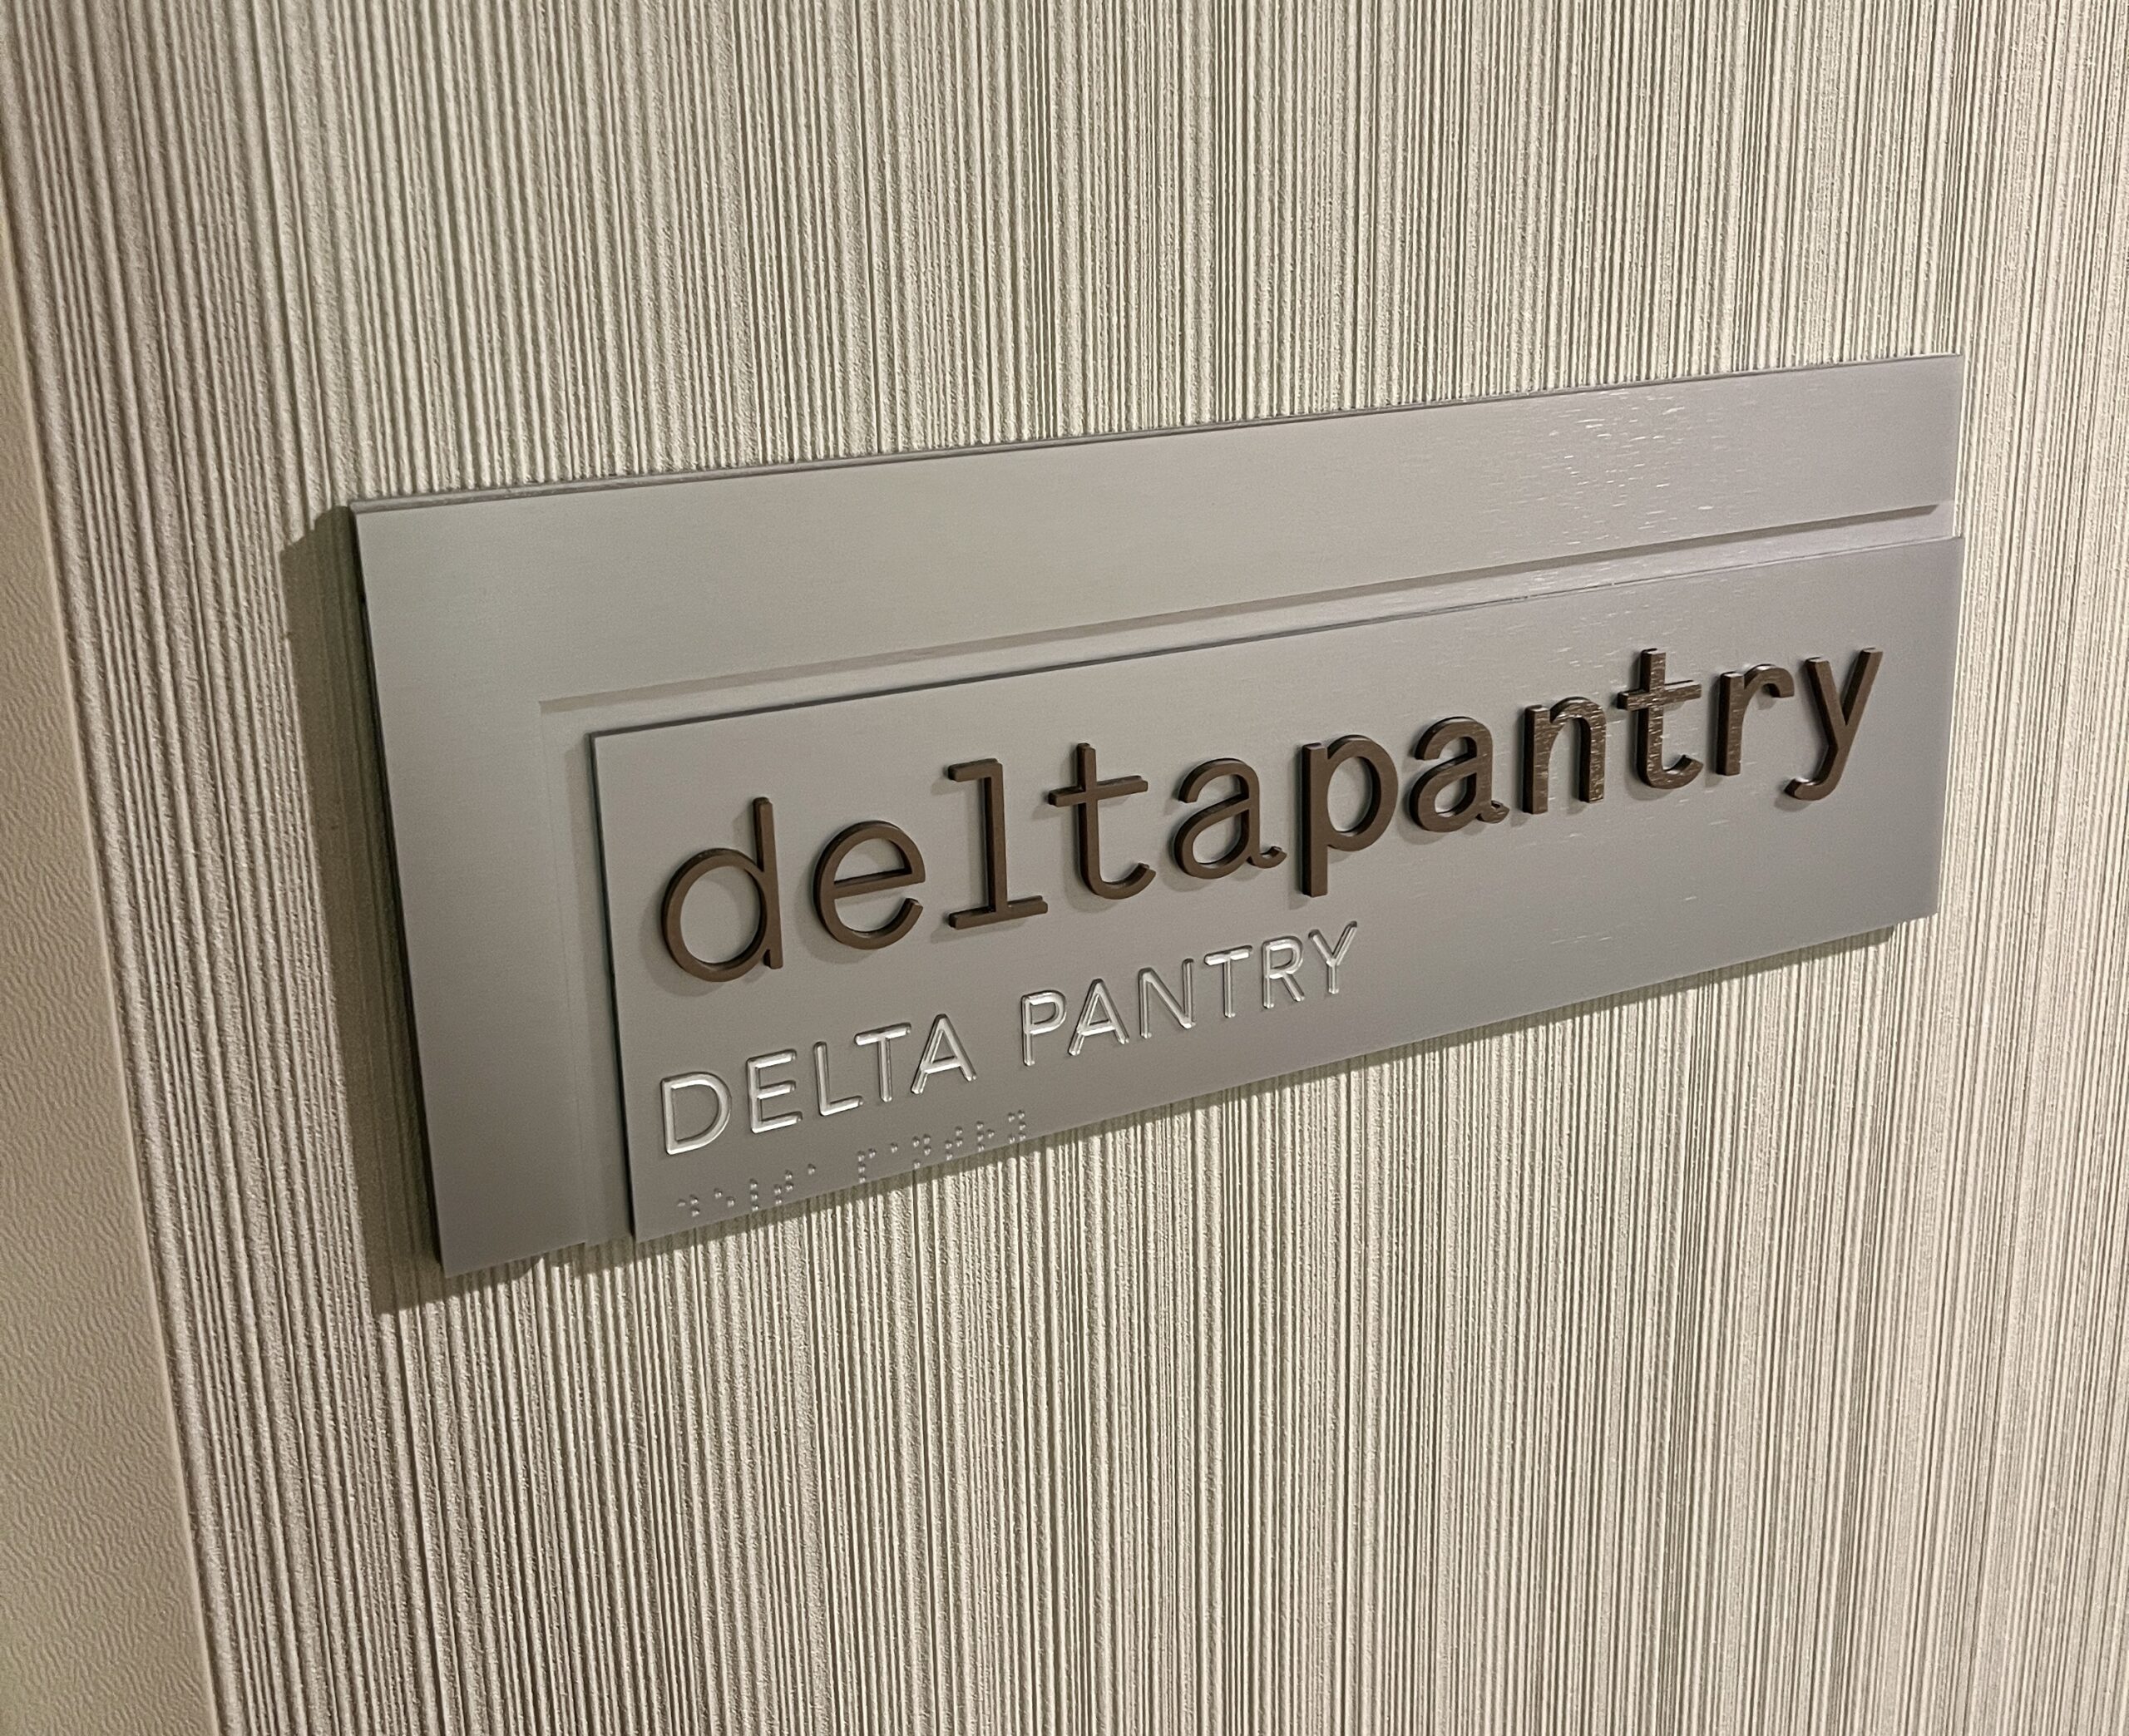 Delta RTP Pantry Sign